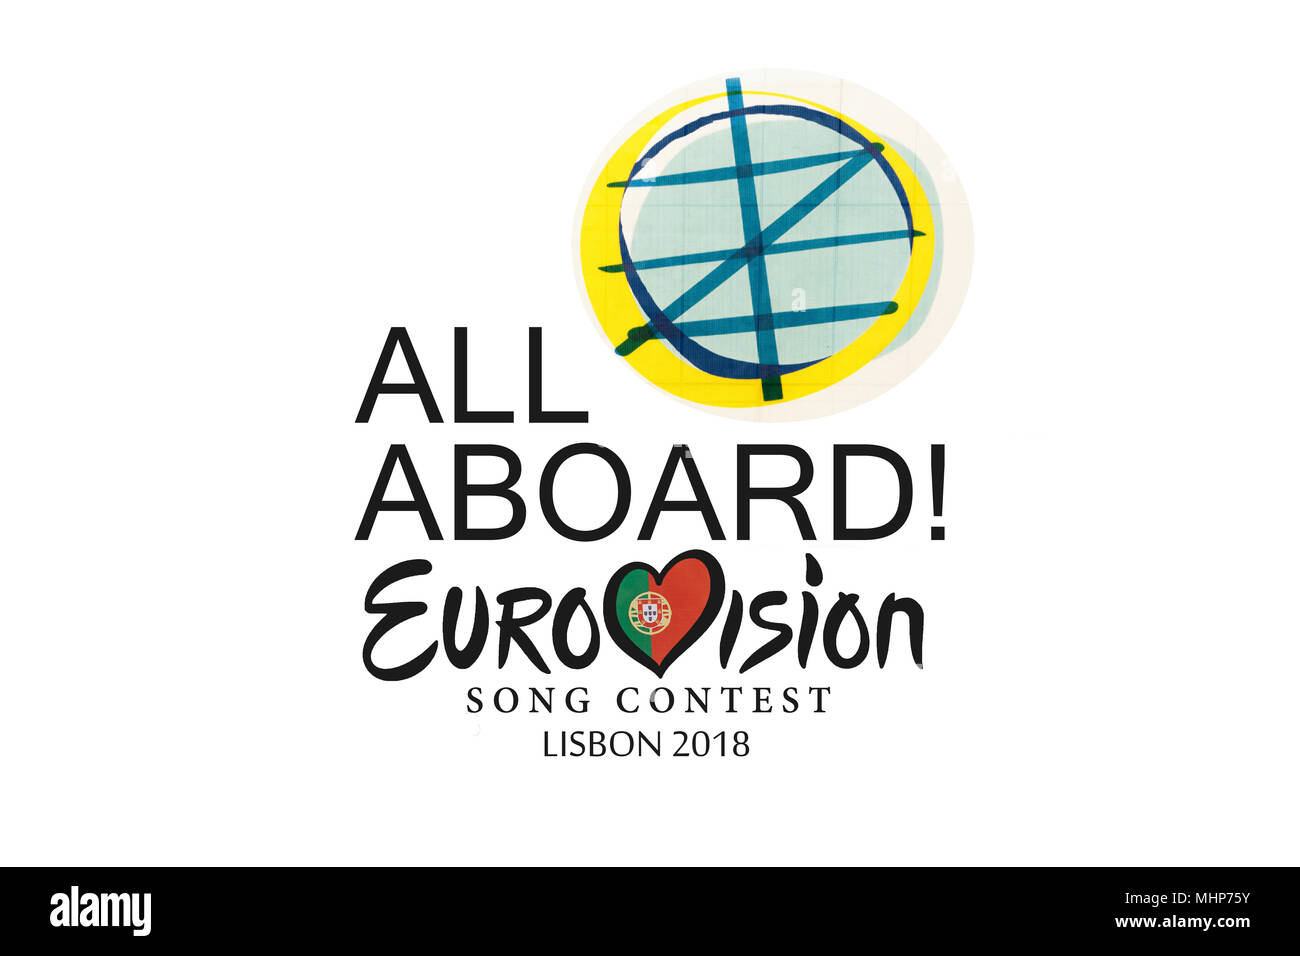 Lisbon, April 24, 2018: illustration Eurovision Song Contest 2018 Lisbon on a white background Stock Photo